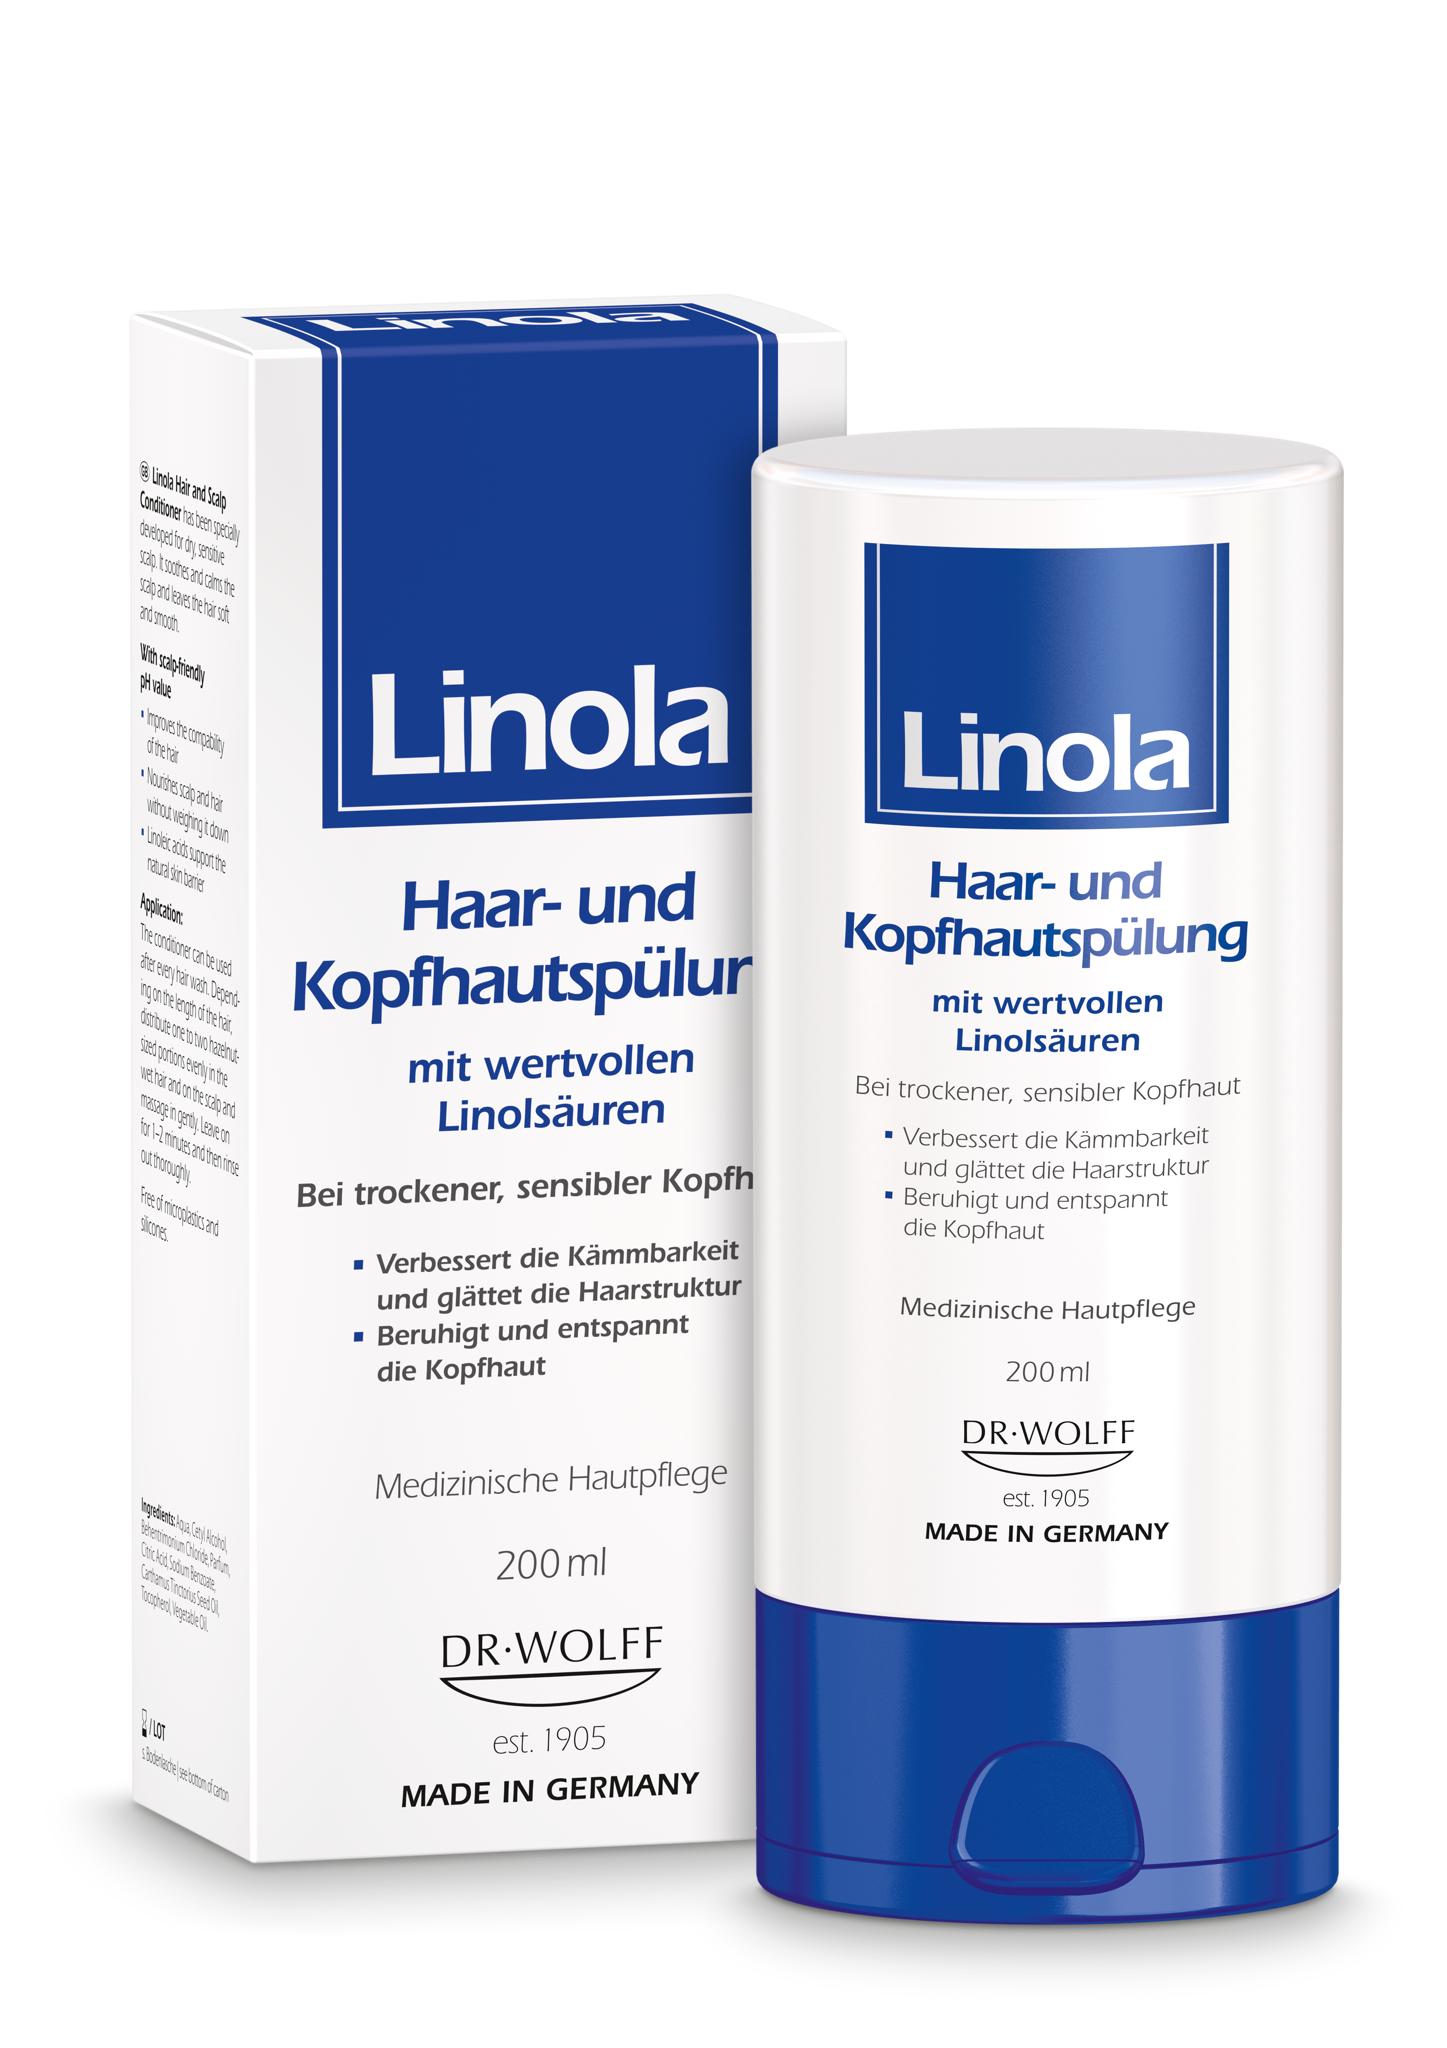 Linola hair and scalp rinsing